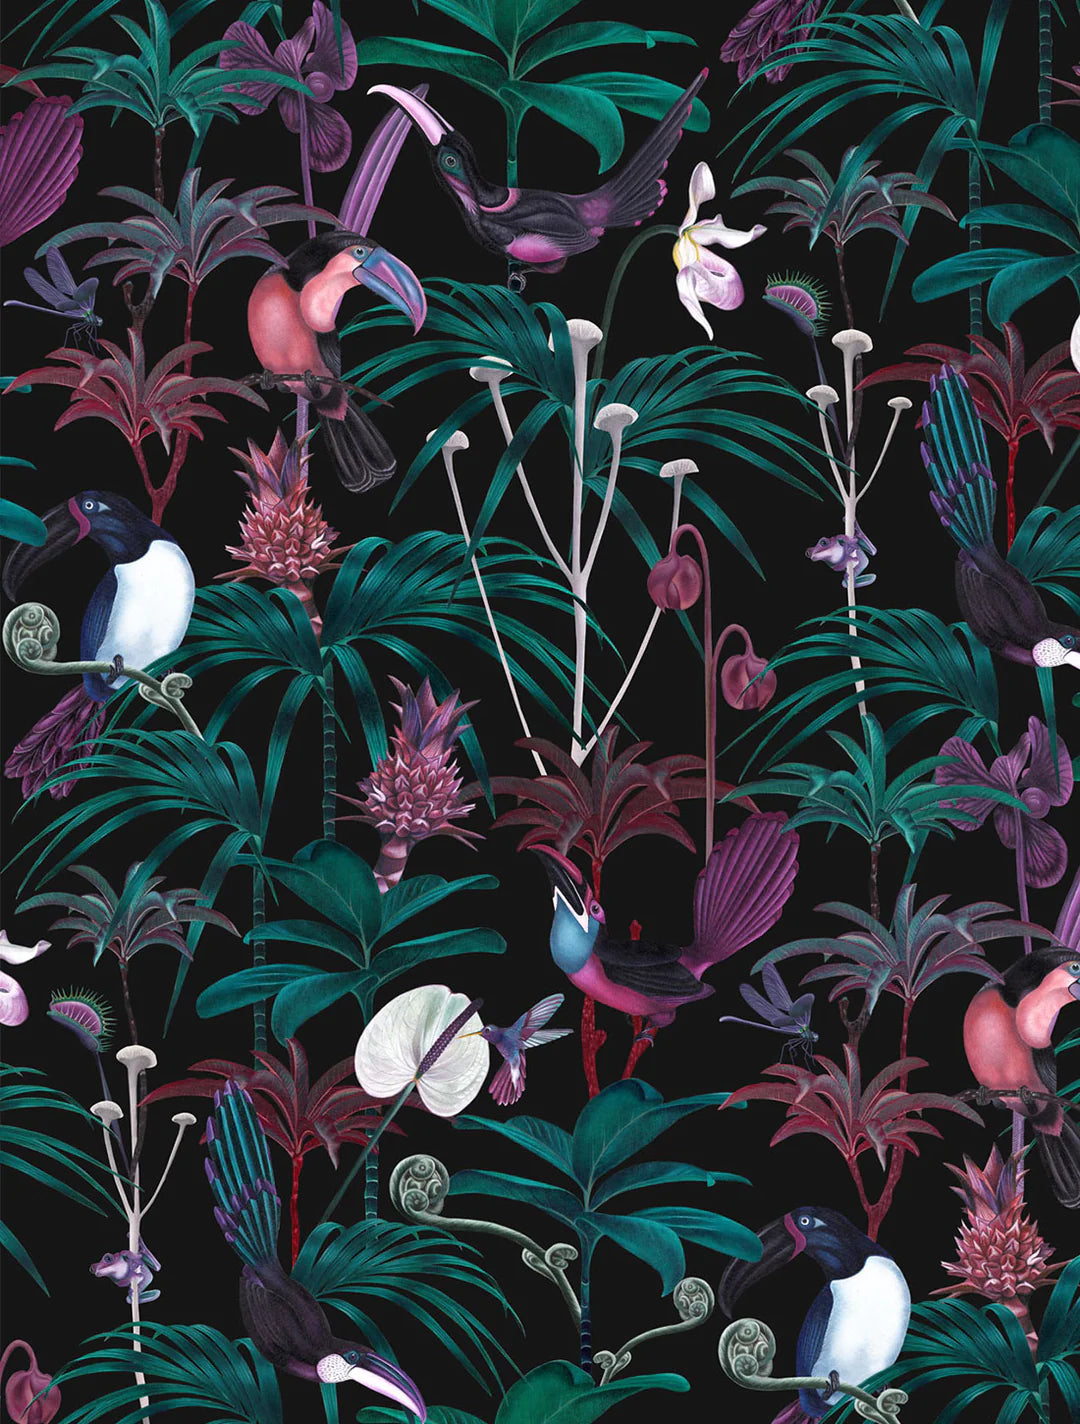 Witch-and-watchman-Xanadu-wallpaper-dark-jungle-scene-exotic-birds-palms-fauna-hot-teal-pink-white-night-scene